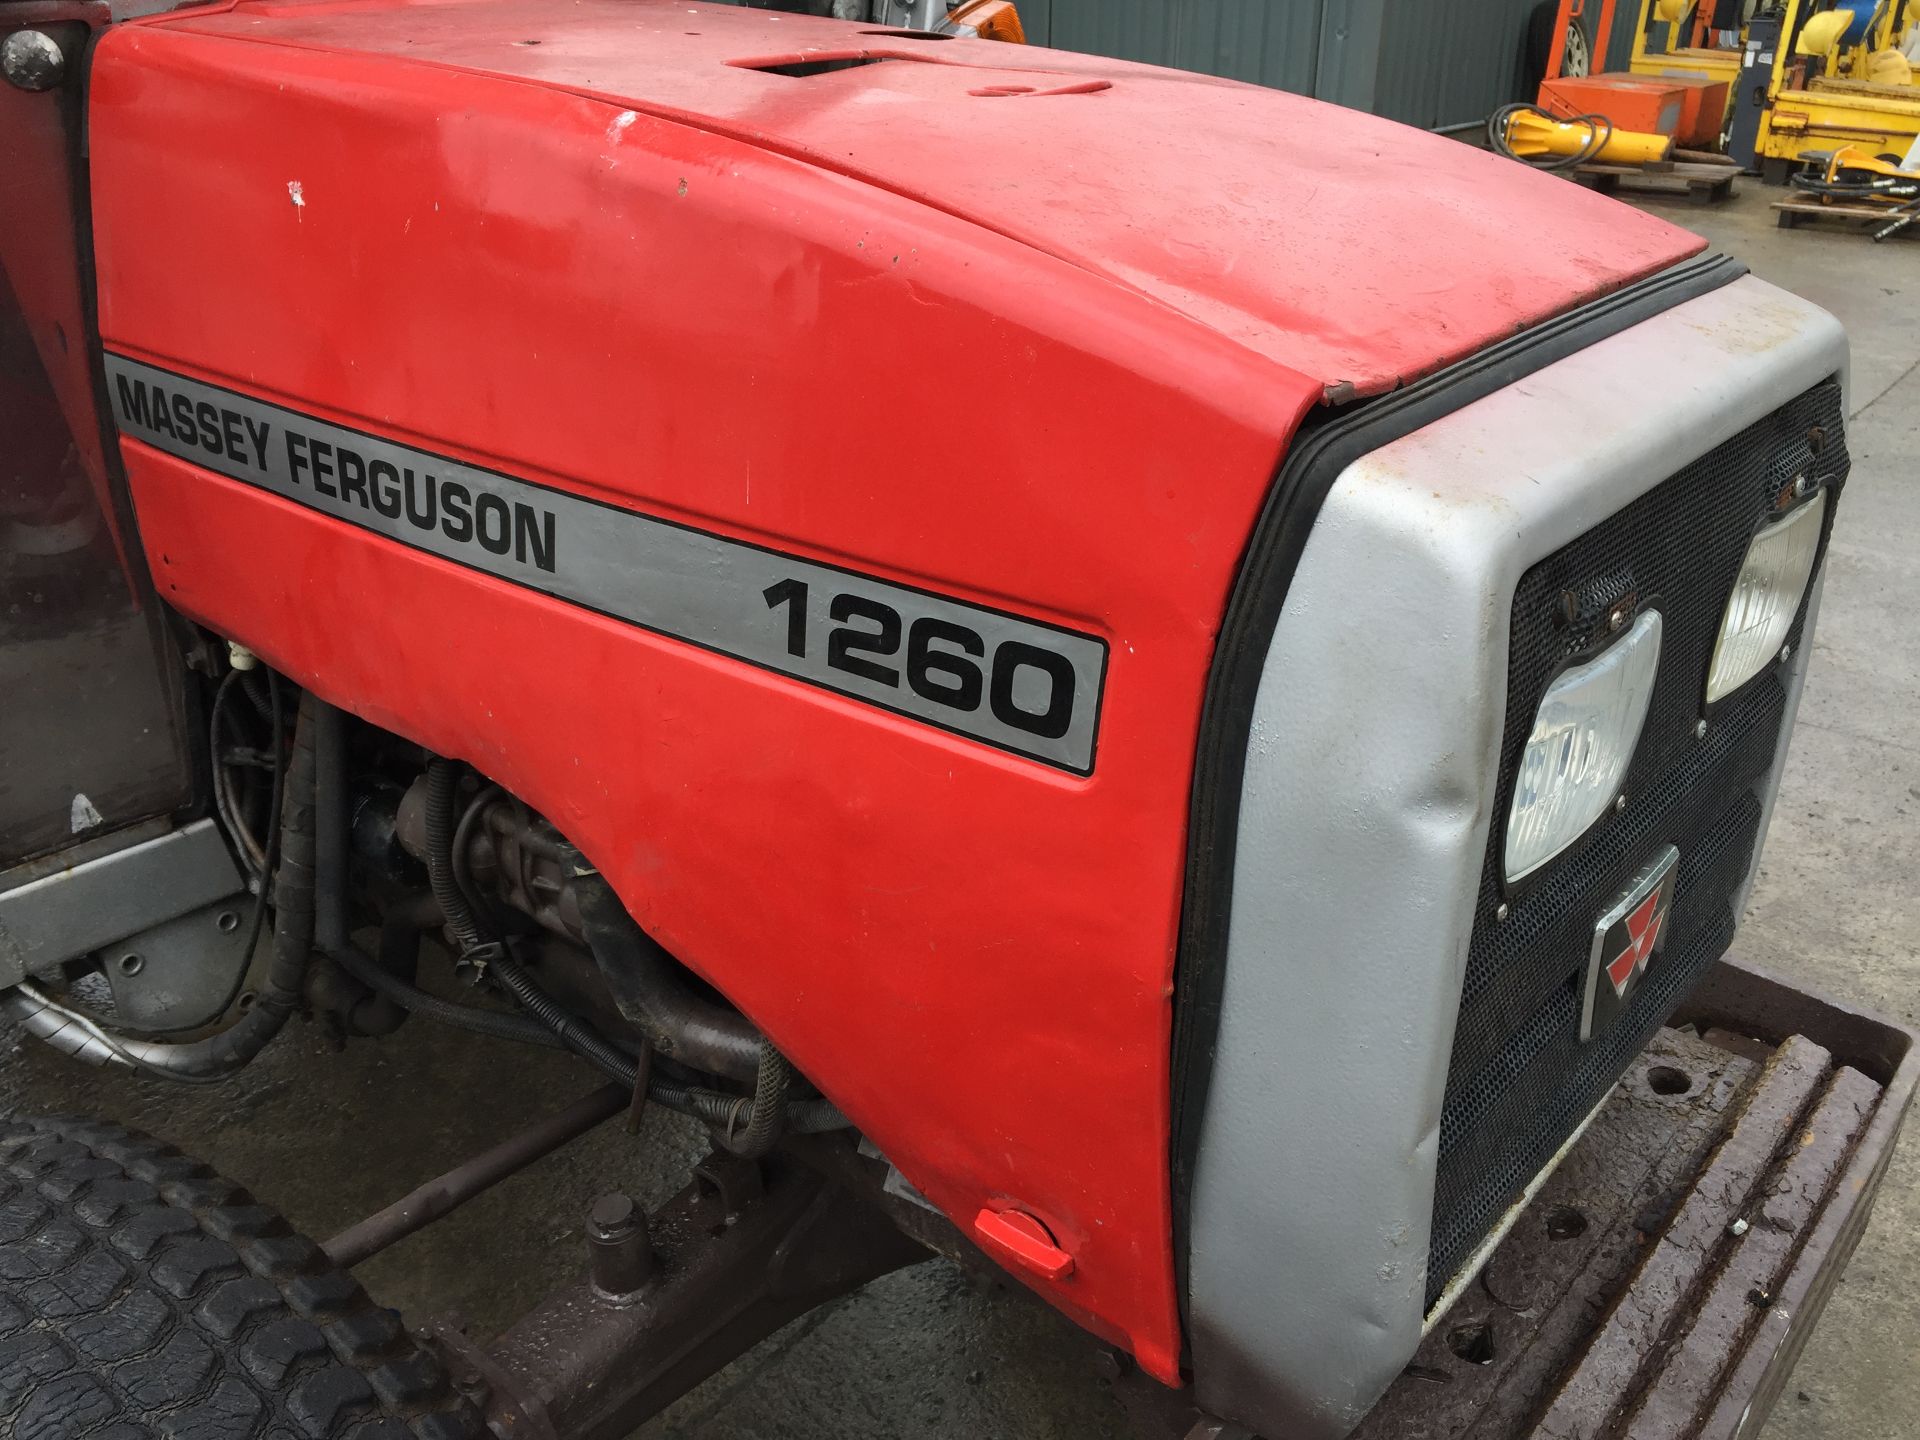 PL-14990 Massey Ferguson 1260 Compact Diesel Tractor - Image 22 of 27